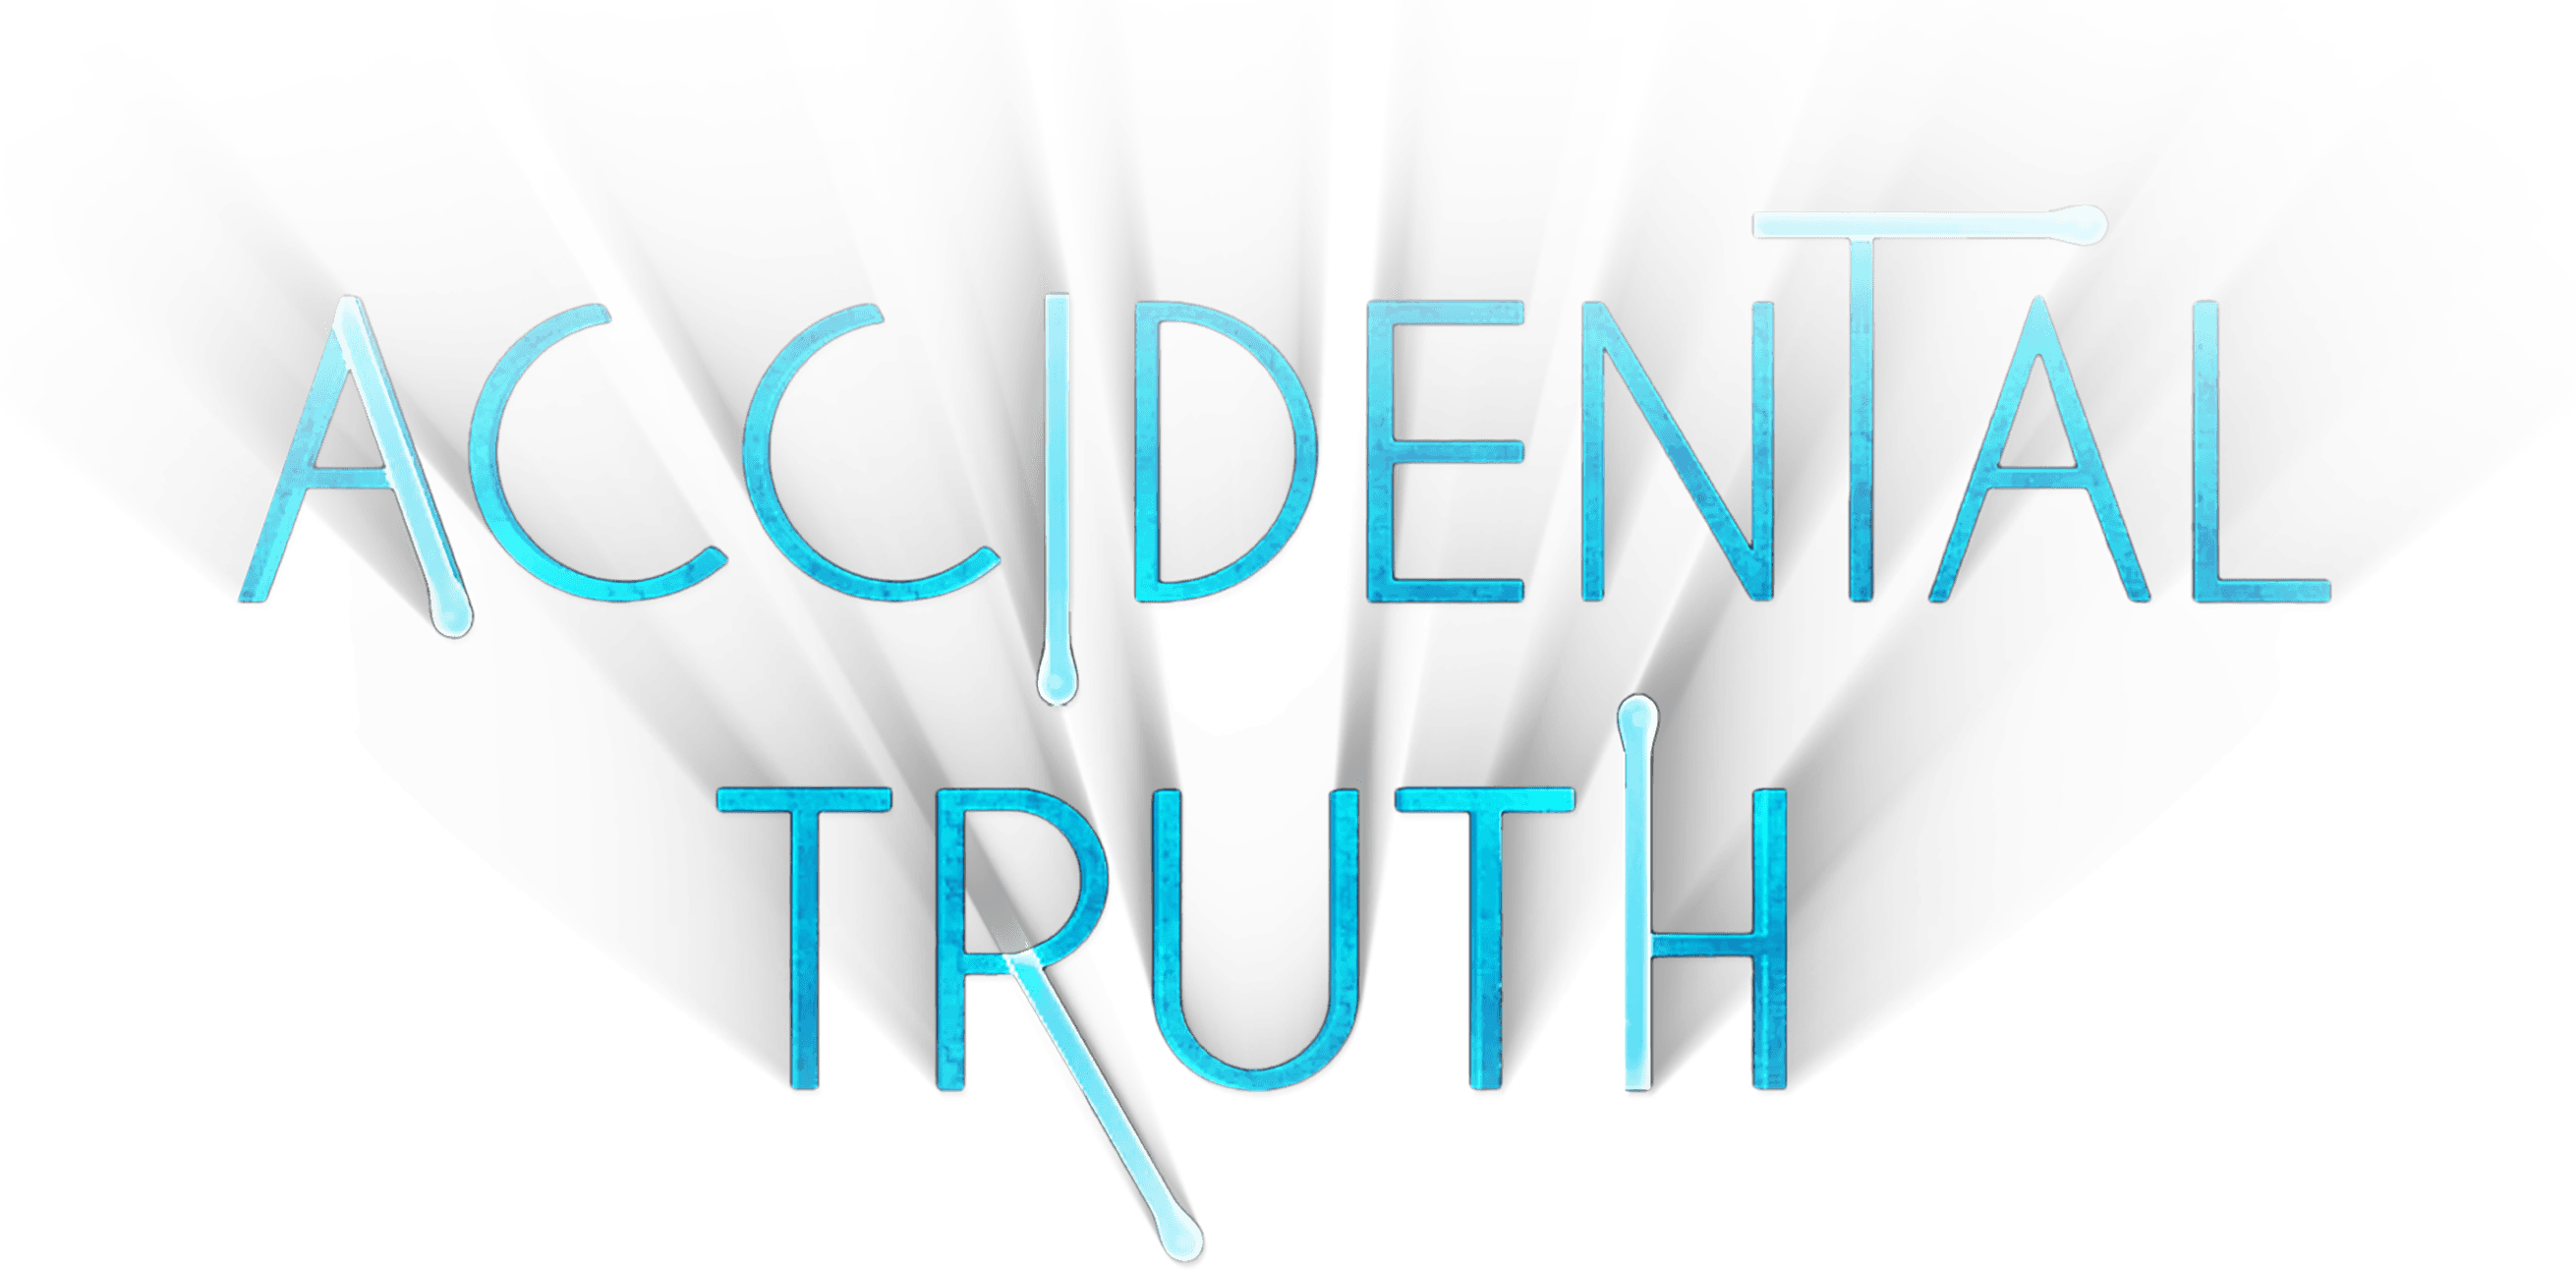 Accidental Truth: UFO Revelations logo